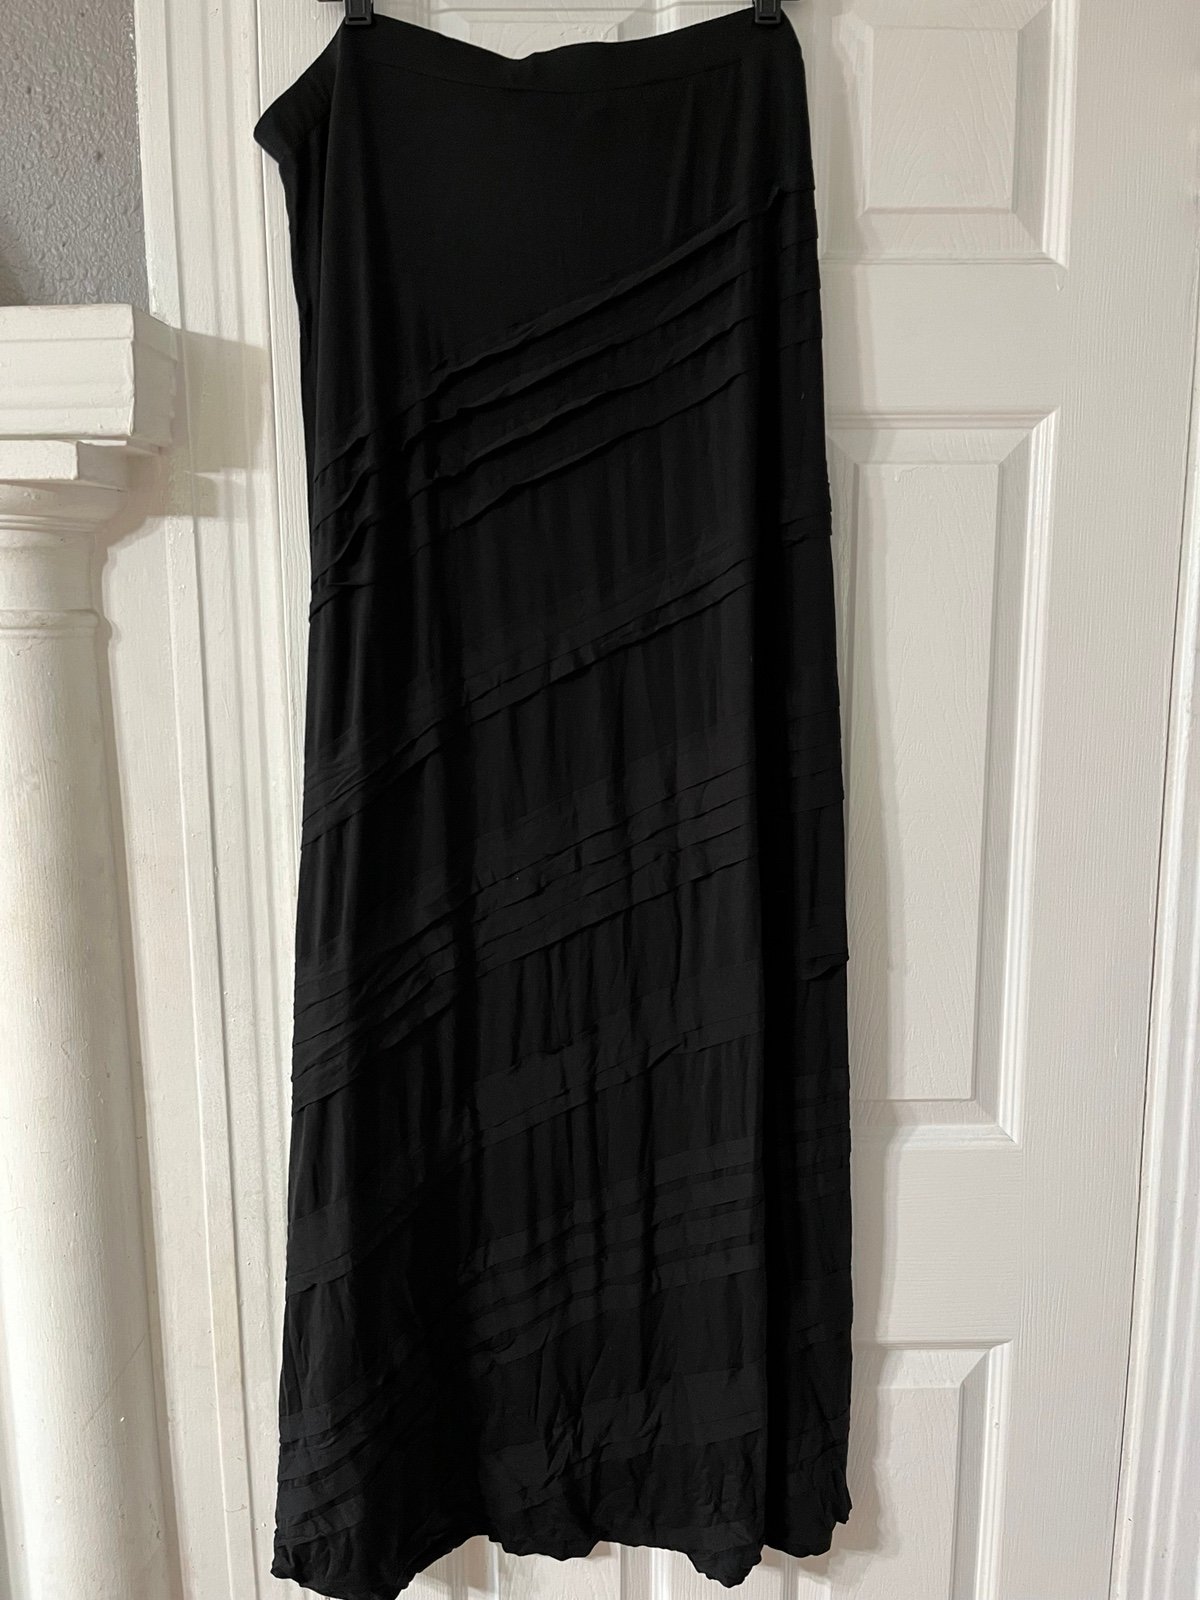 Wholesale price Long Elegant Legs Women’s Size 16 Black Long Skirt Raffles Elastic Waist Skirt, L1B1BZDDB Cool